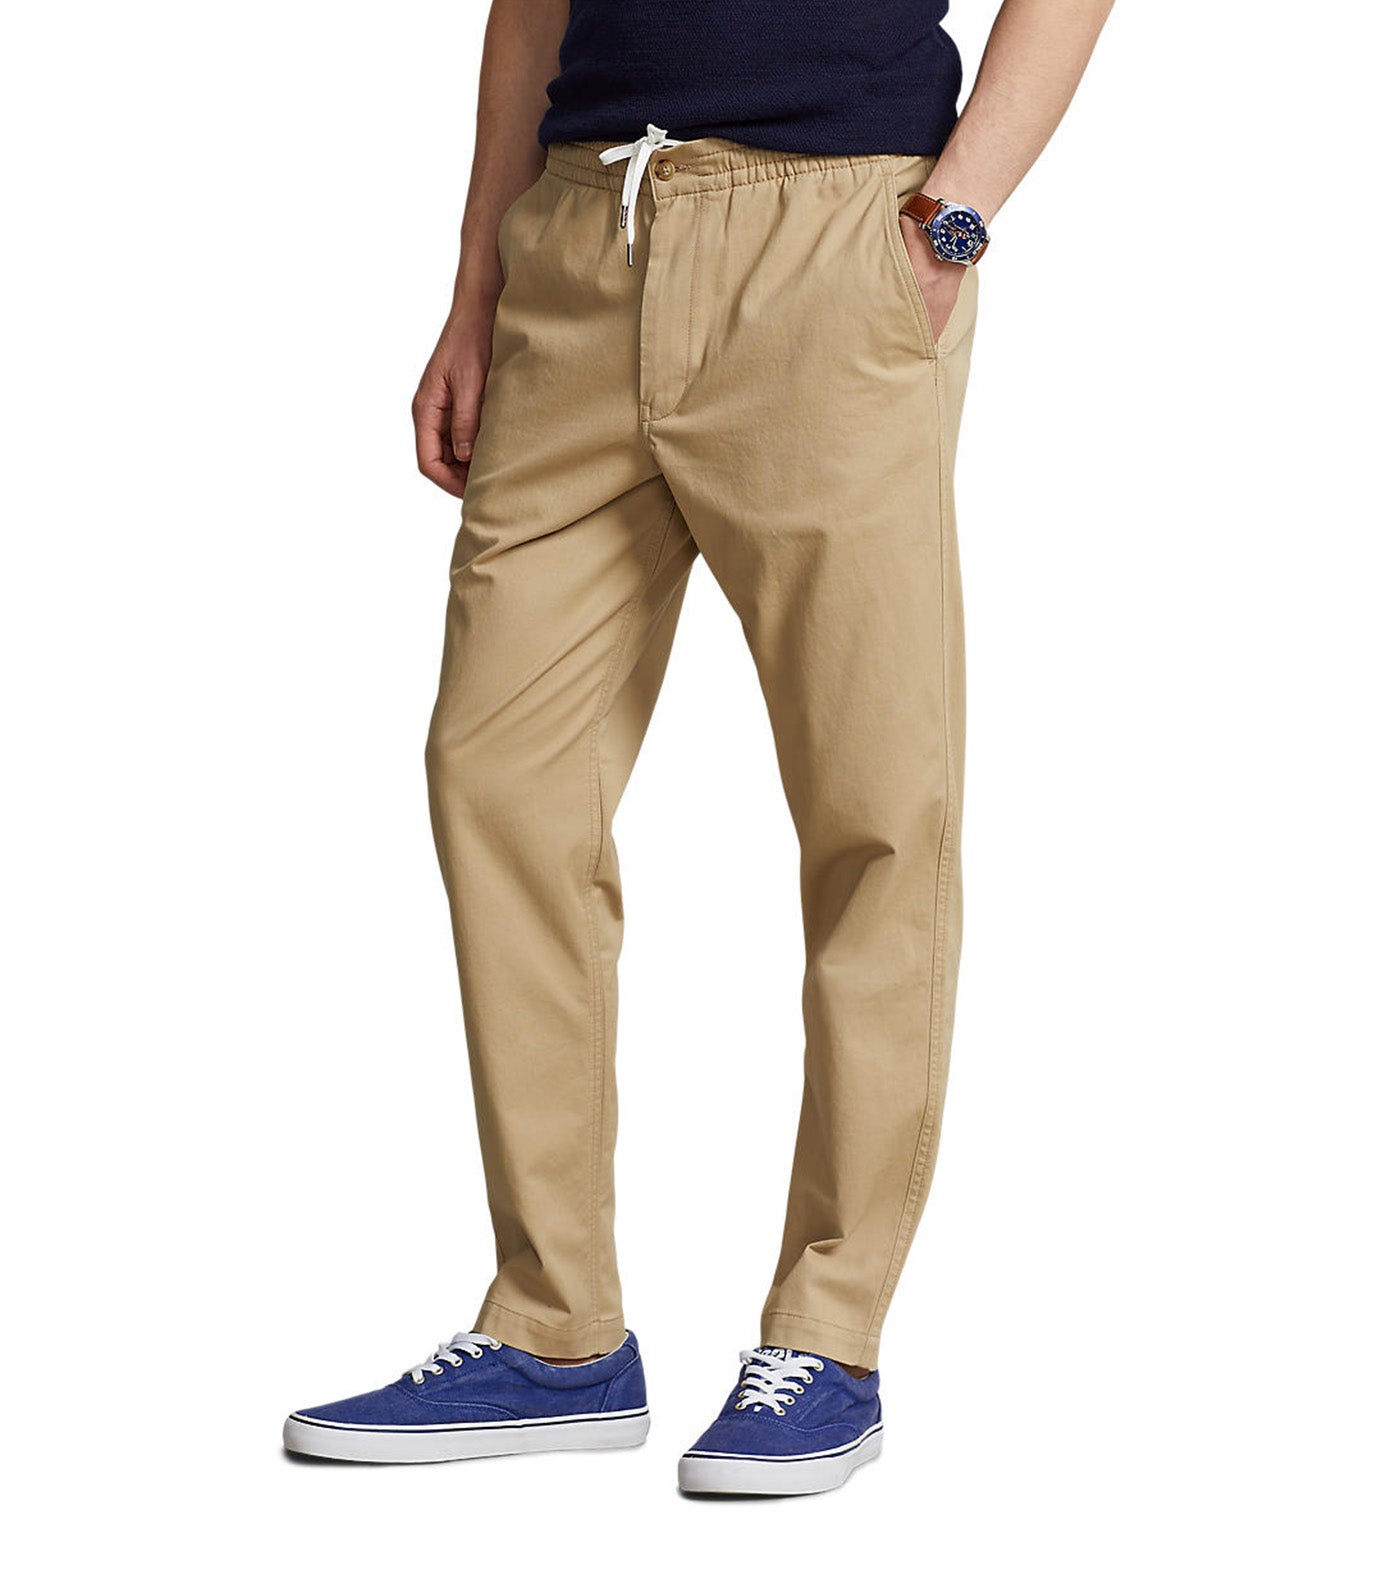 Polo Ralph Lauren BASIC SAND Stretch Slim Fit Chino Trouser in Utako -  Clothing, Bsdirect Stores